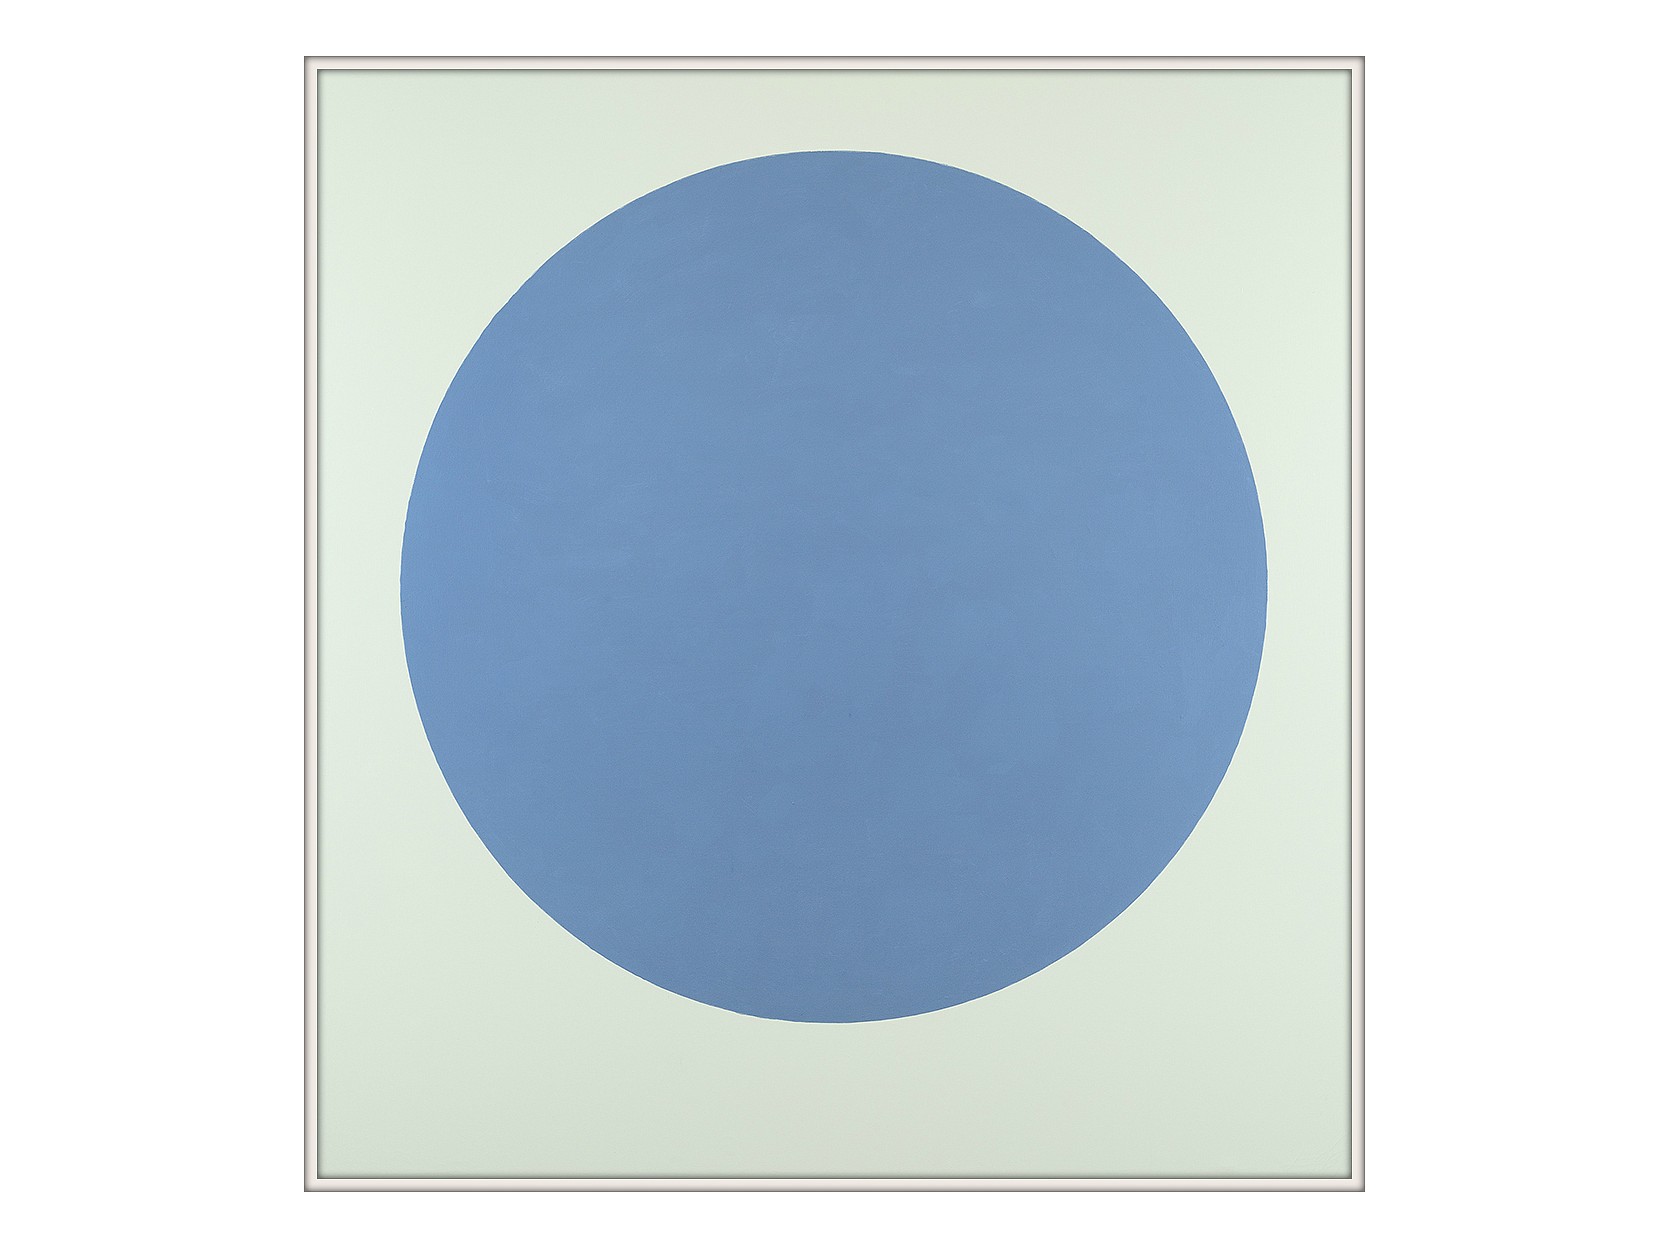 Info: Walter Darby Bannard | Minimal Color Field Paintings 1958-1965, Mar 19 - Apr 18, 2015